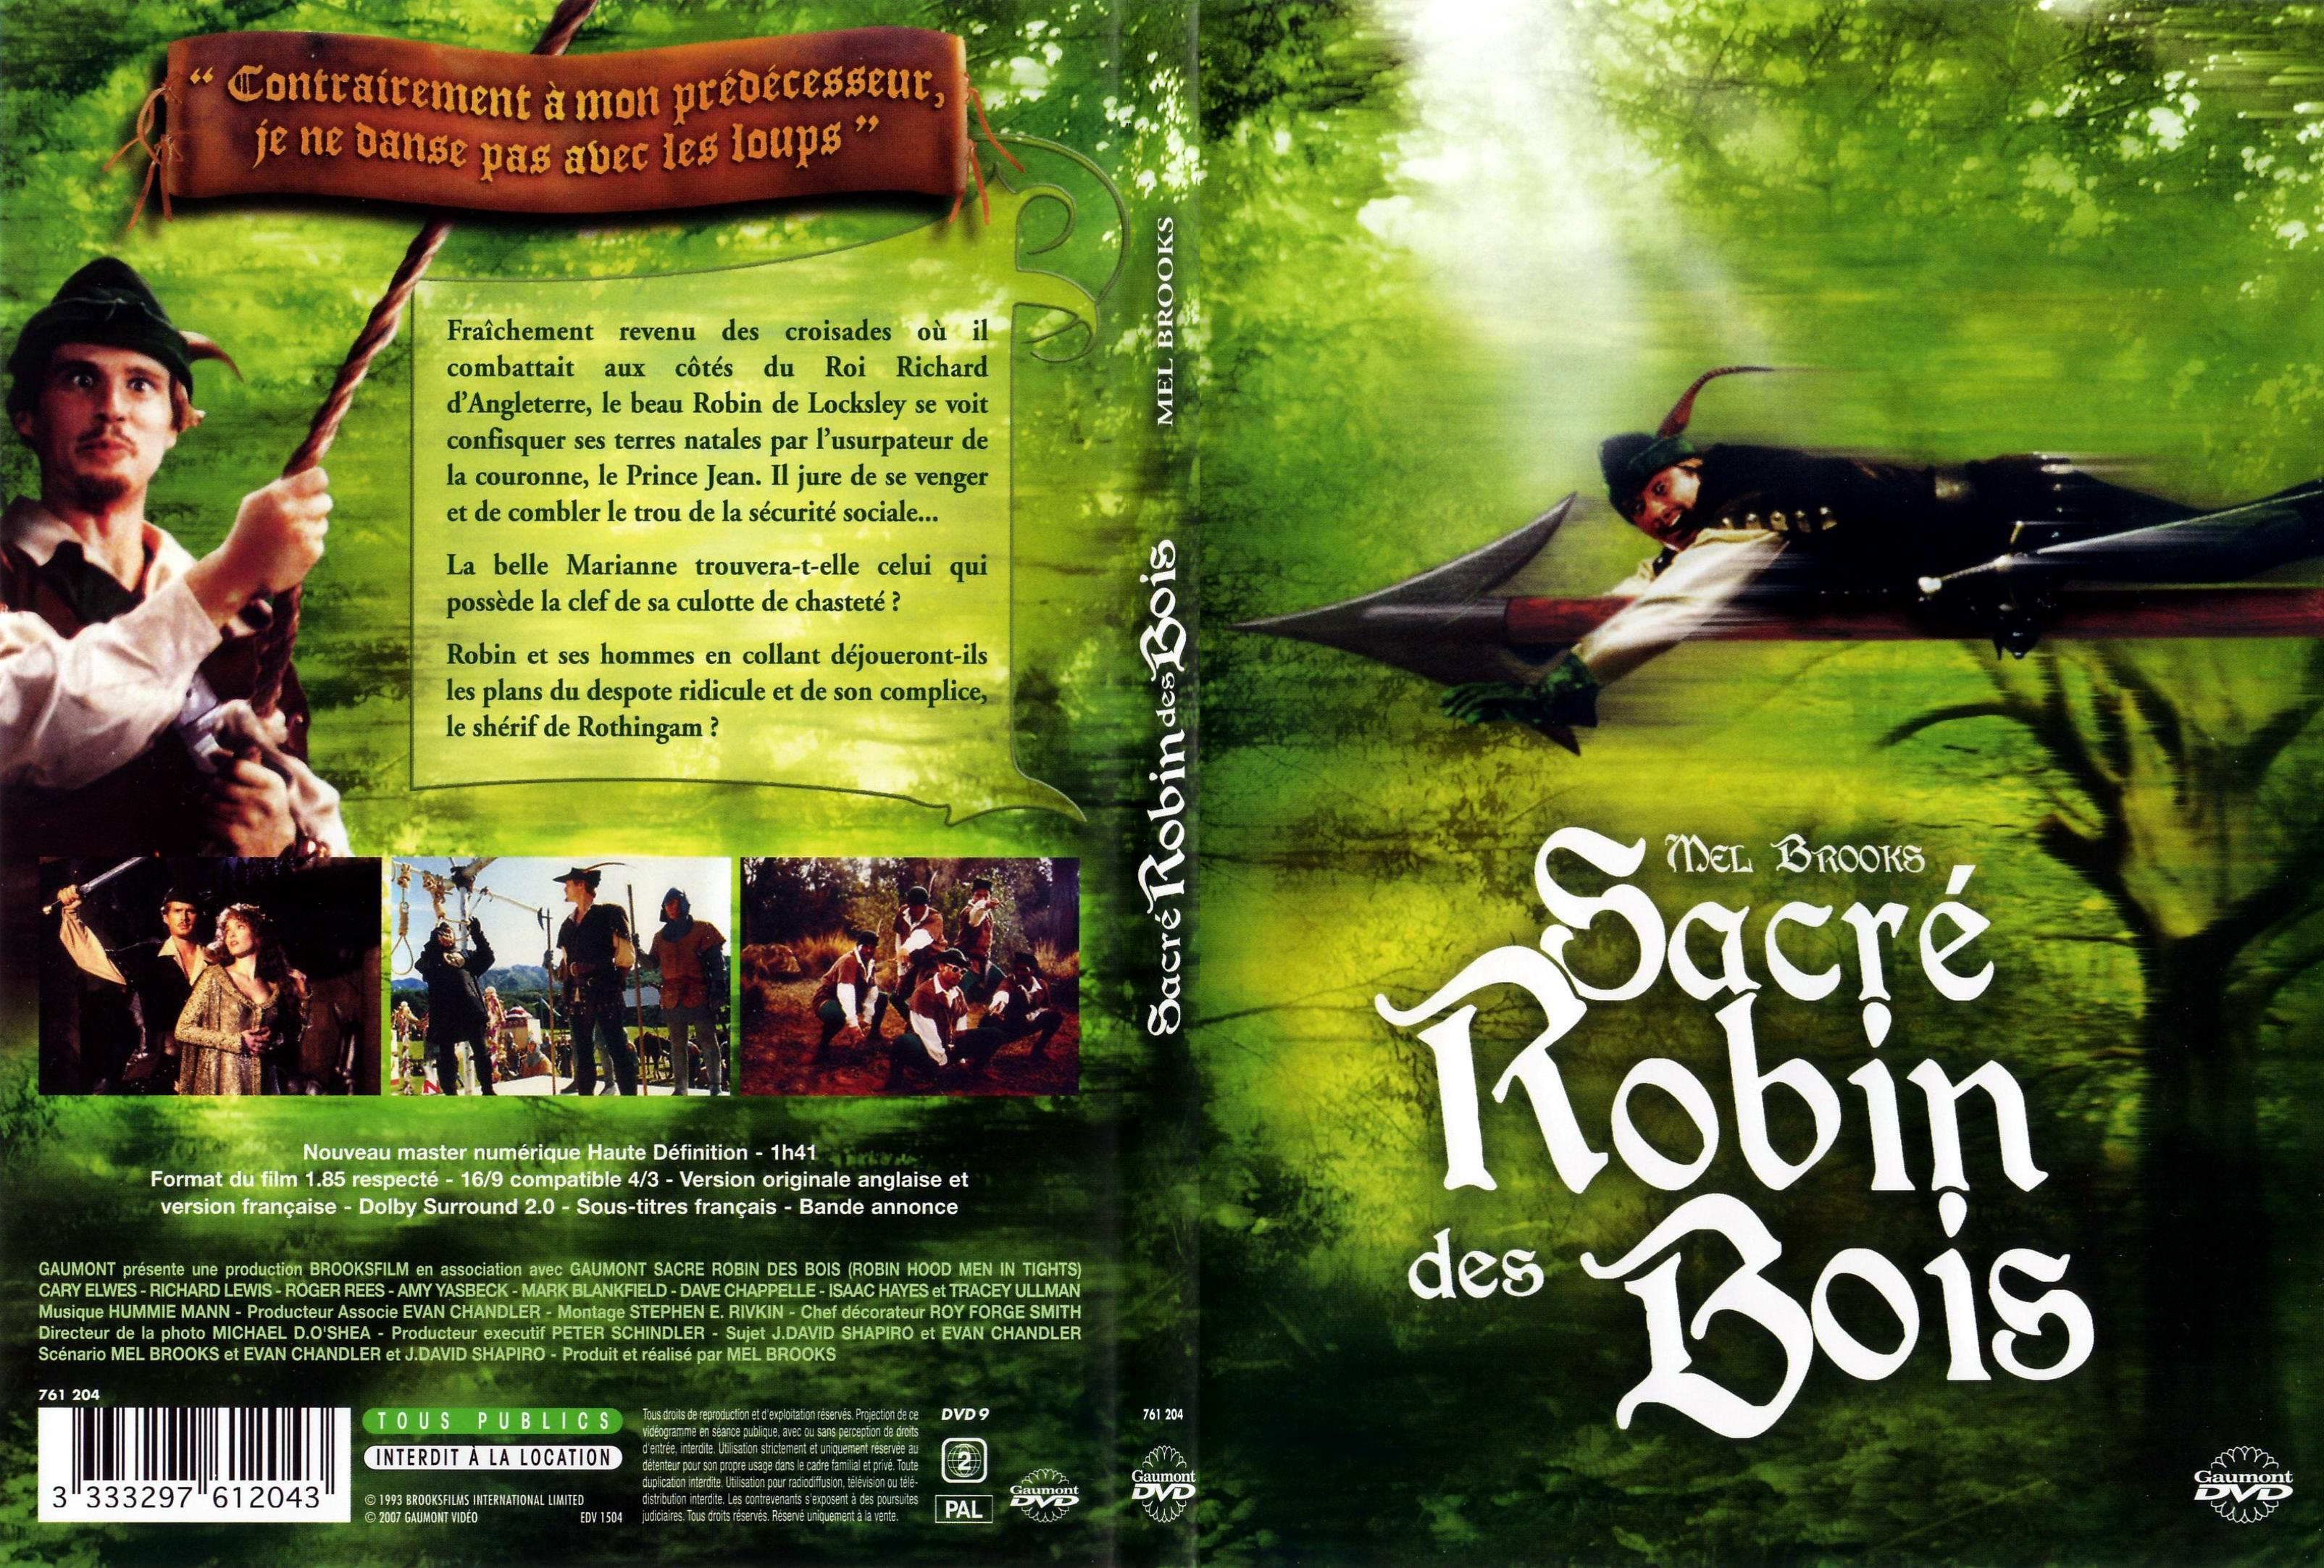 Jaquette DVD Sacre Robin des bois - SLIM